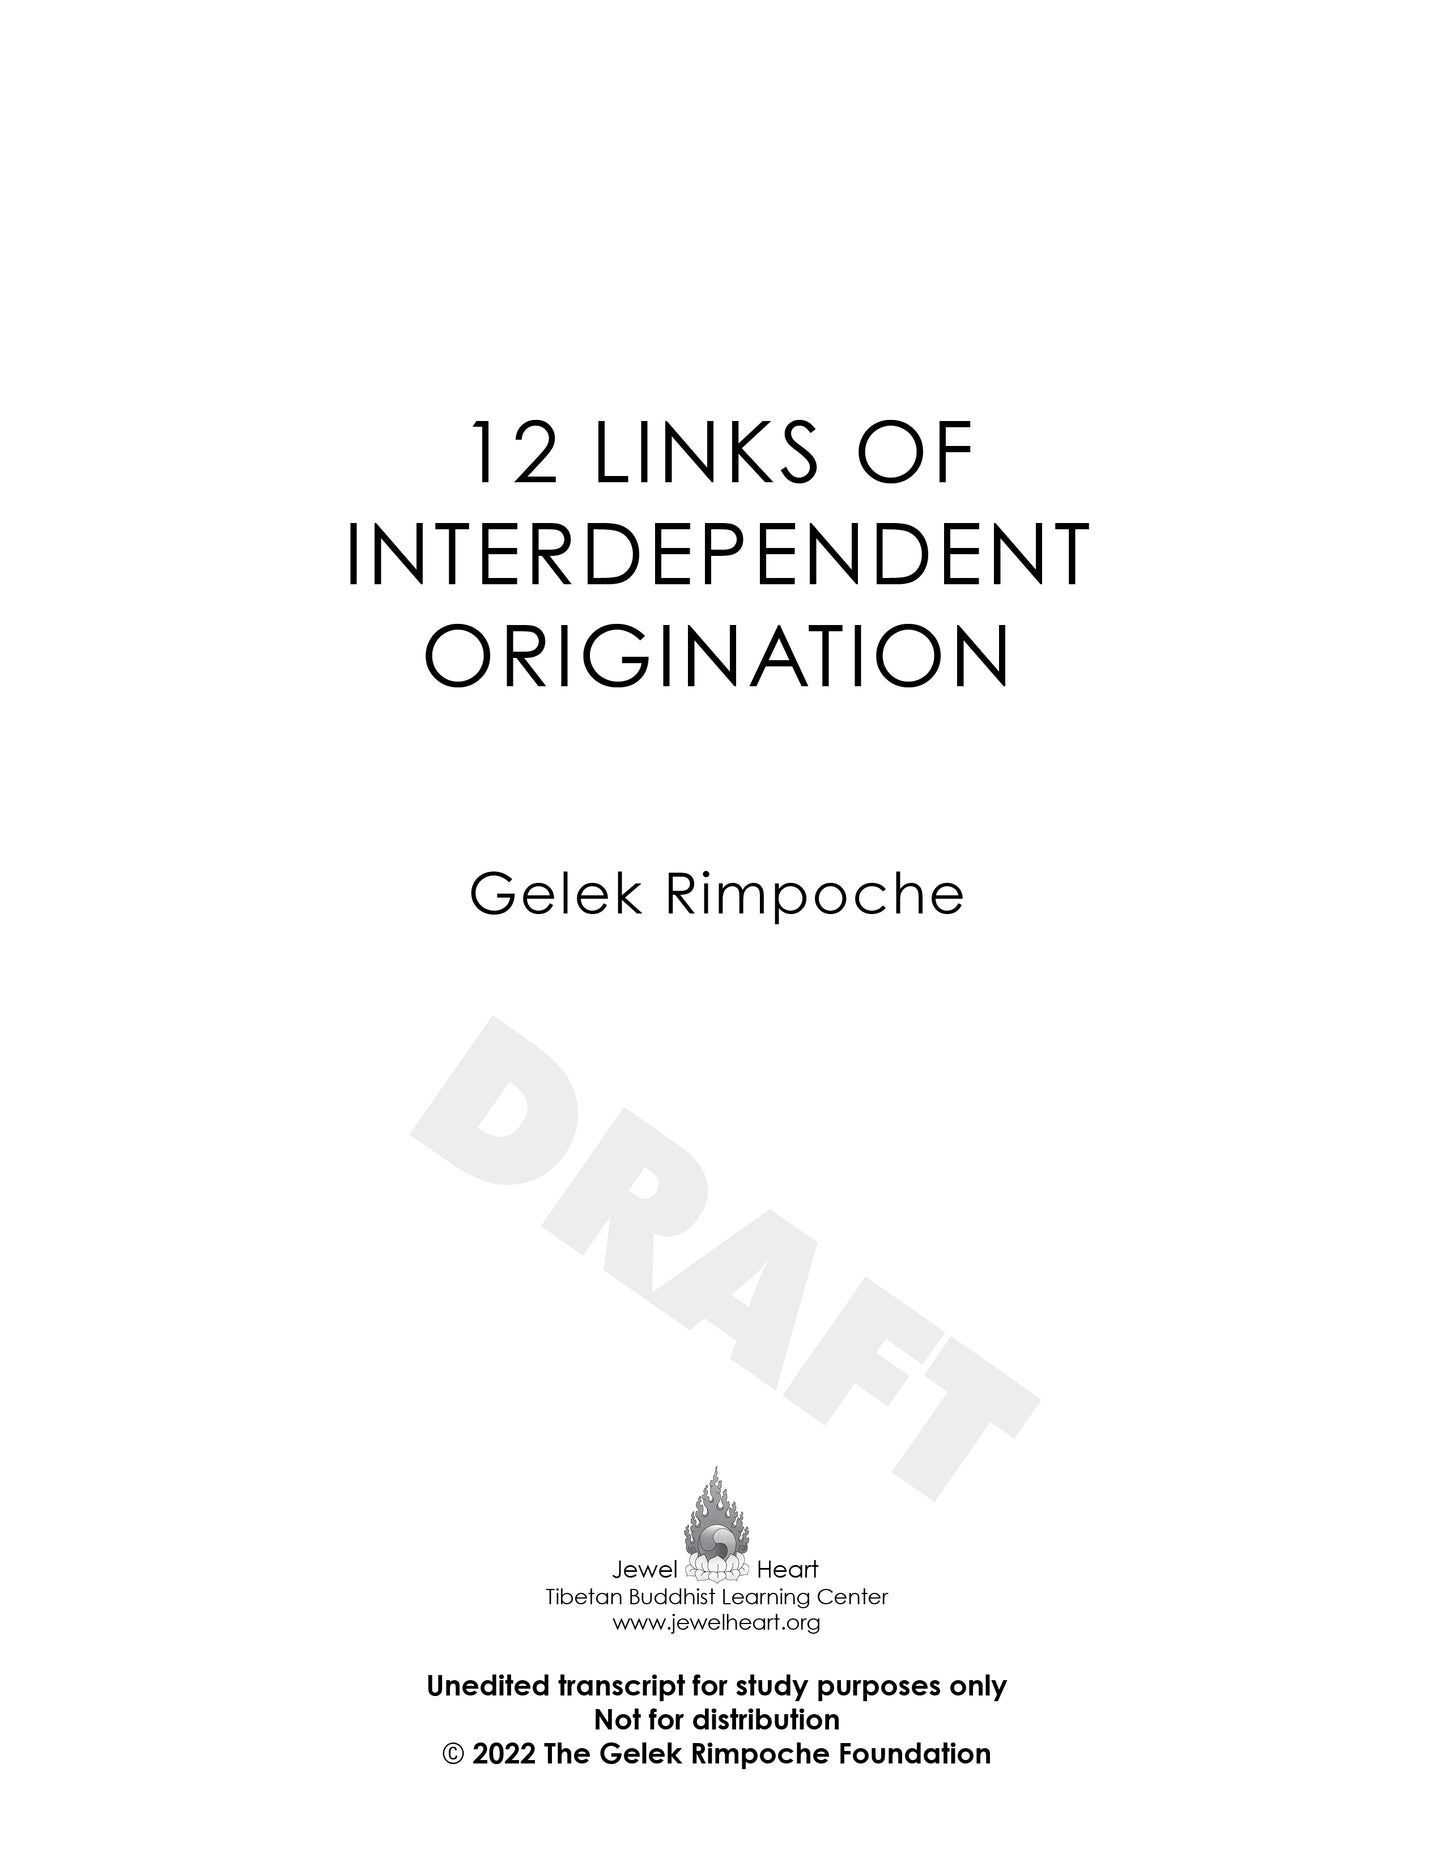 12 LINKS OF INTERDEPENDENT ORIGINATION